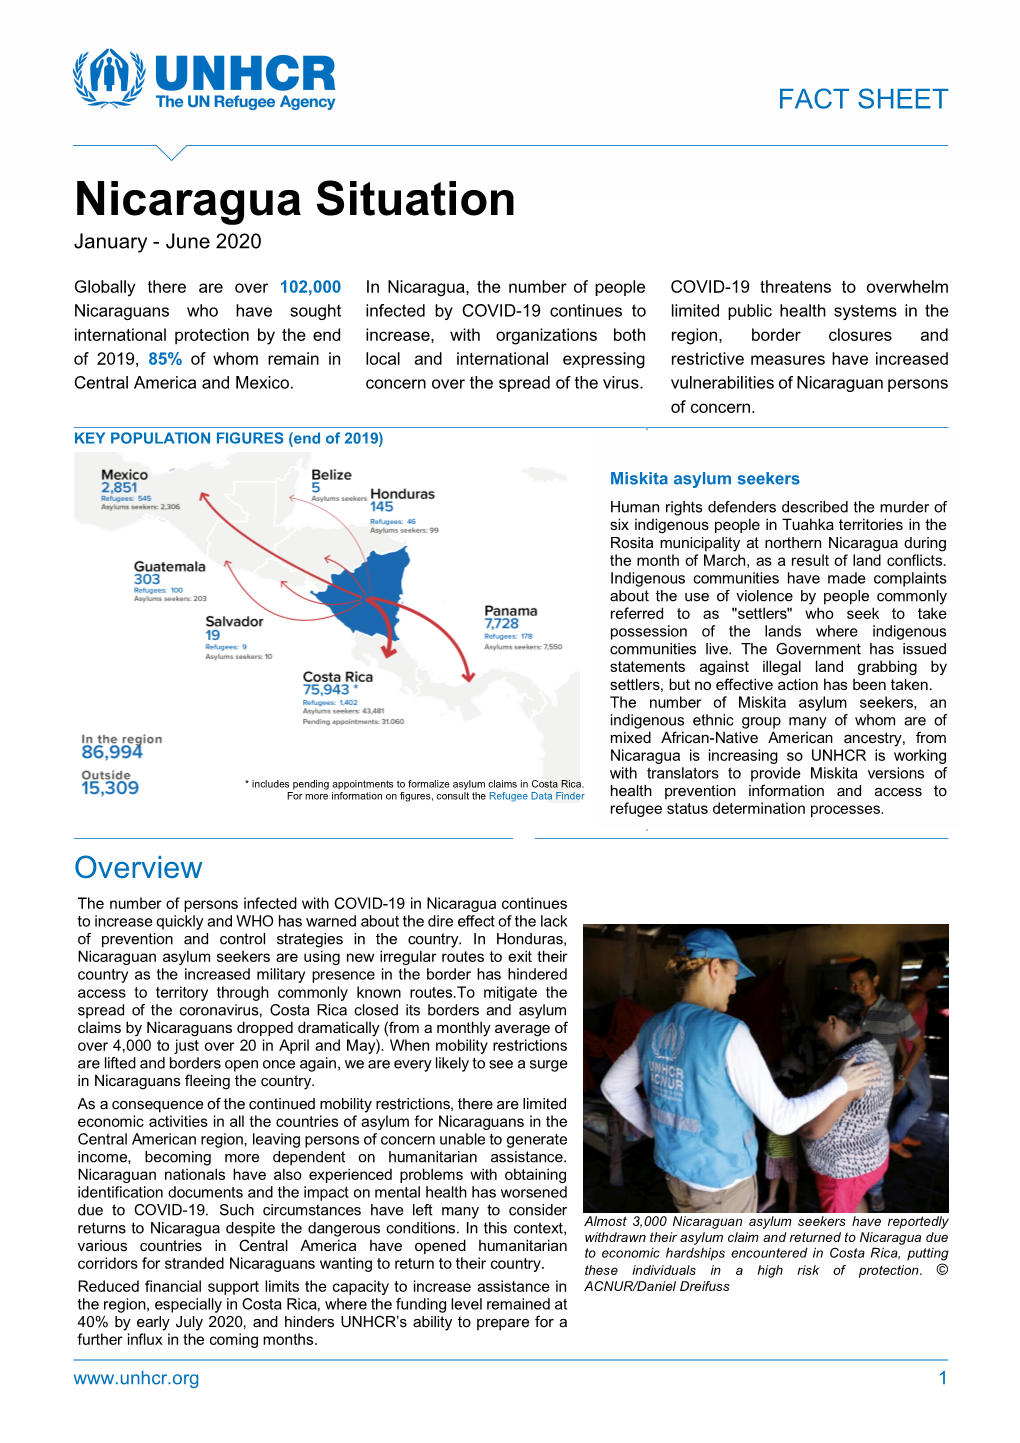 UNHCR Nicaragua Situation Factsheet